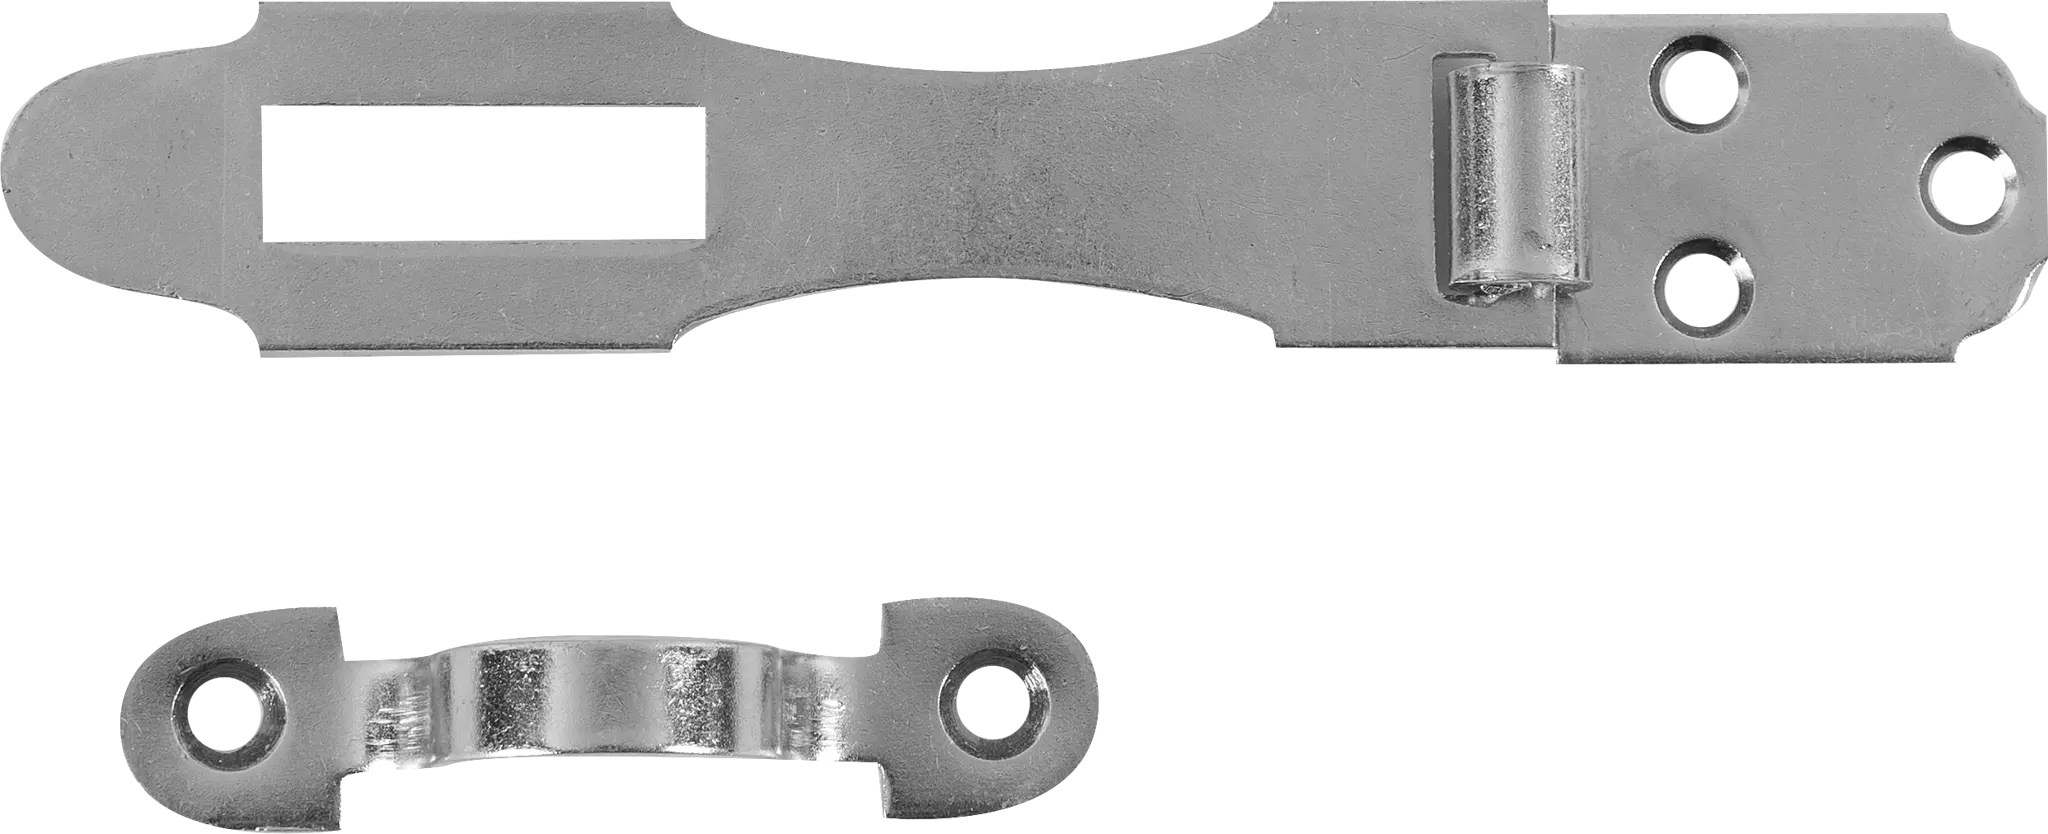 Накладка для навесного замка 90 мм дверная накладка для навесного замка олимп